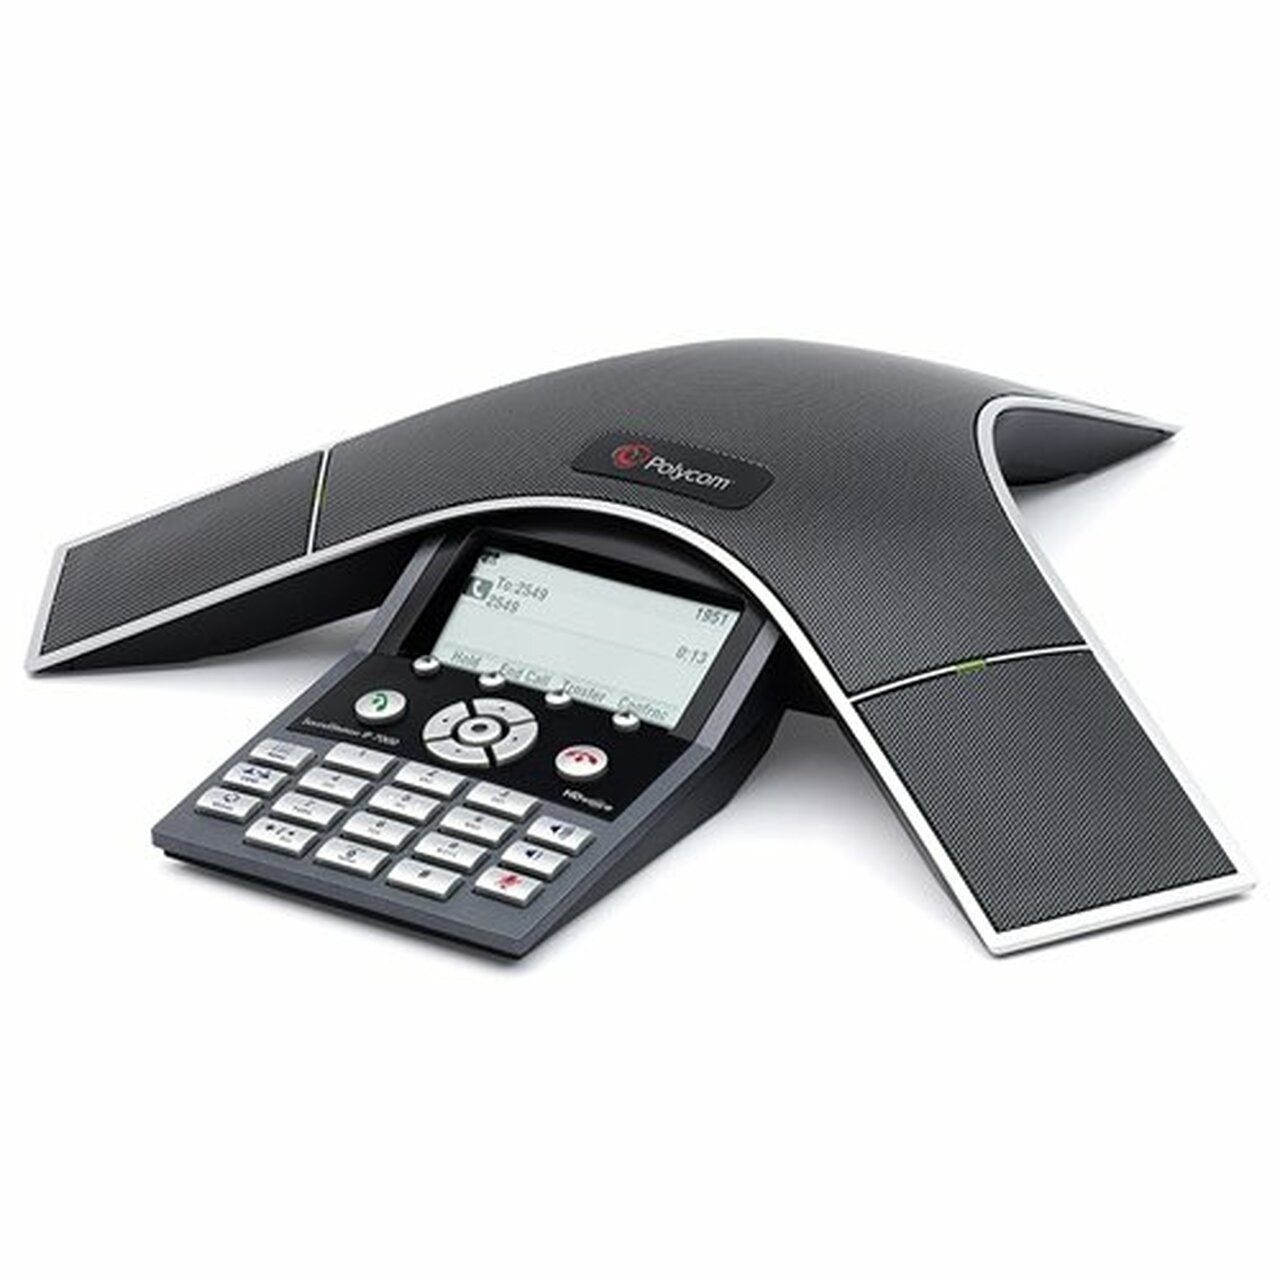 2200-40000-025 | POLYCOM Soundstation Ip 7000 Conference Phone 1x Rj-45 10/100base-tx Voip Phone